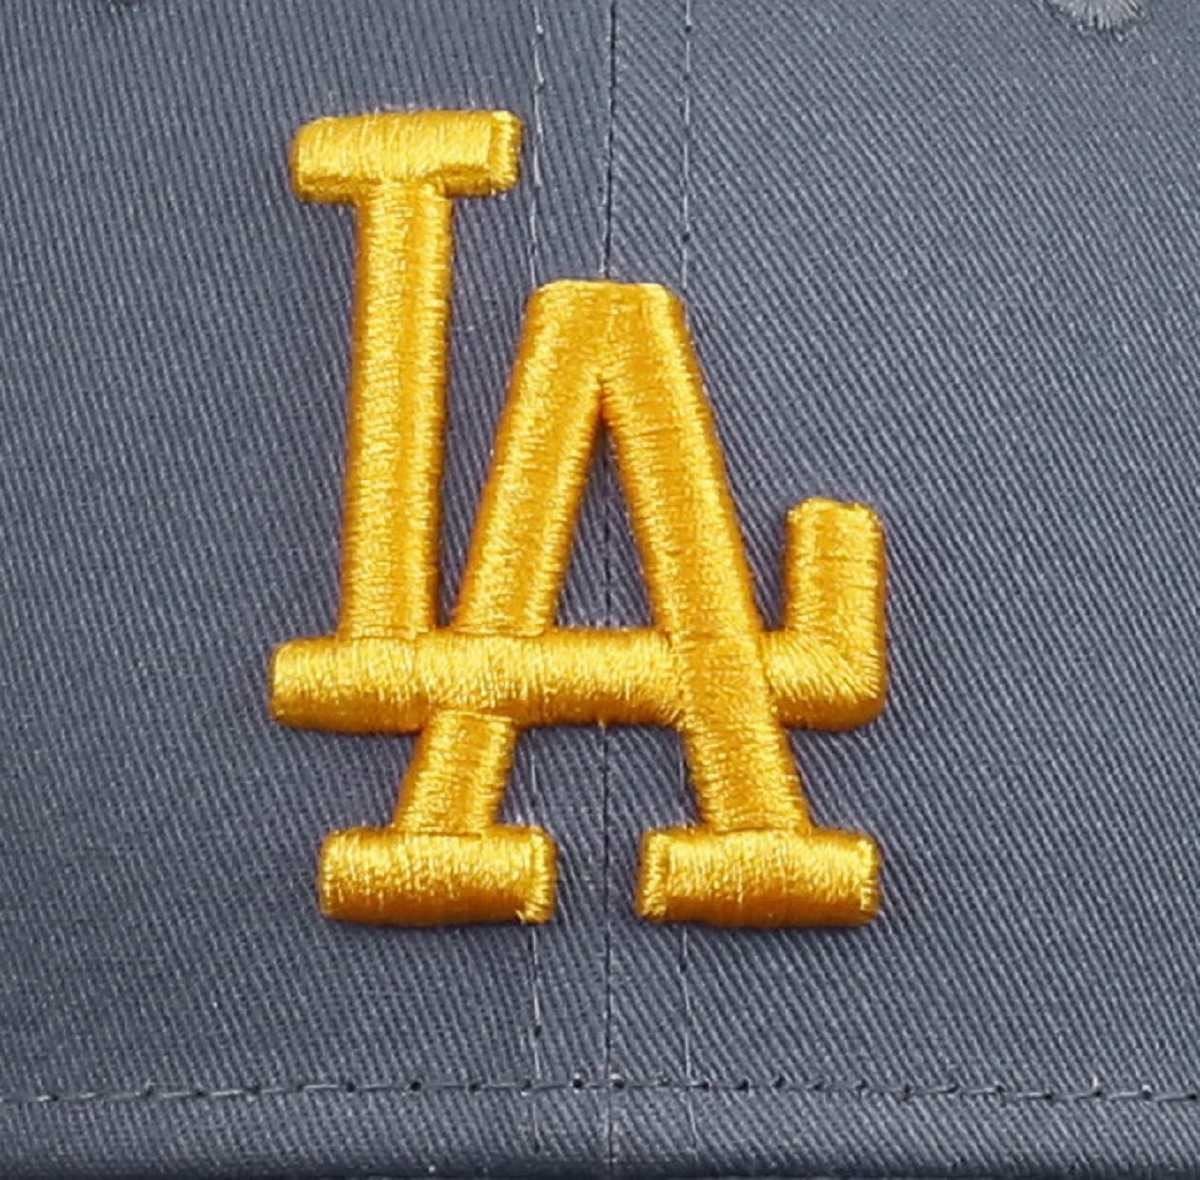 Los Angeles Dodgers League Essential 9Forty Cap New Era